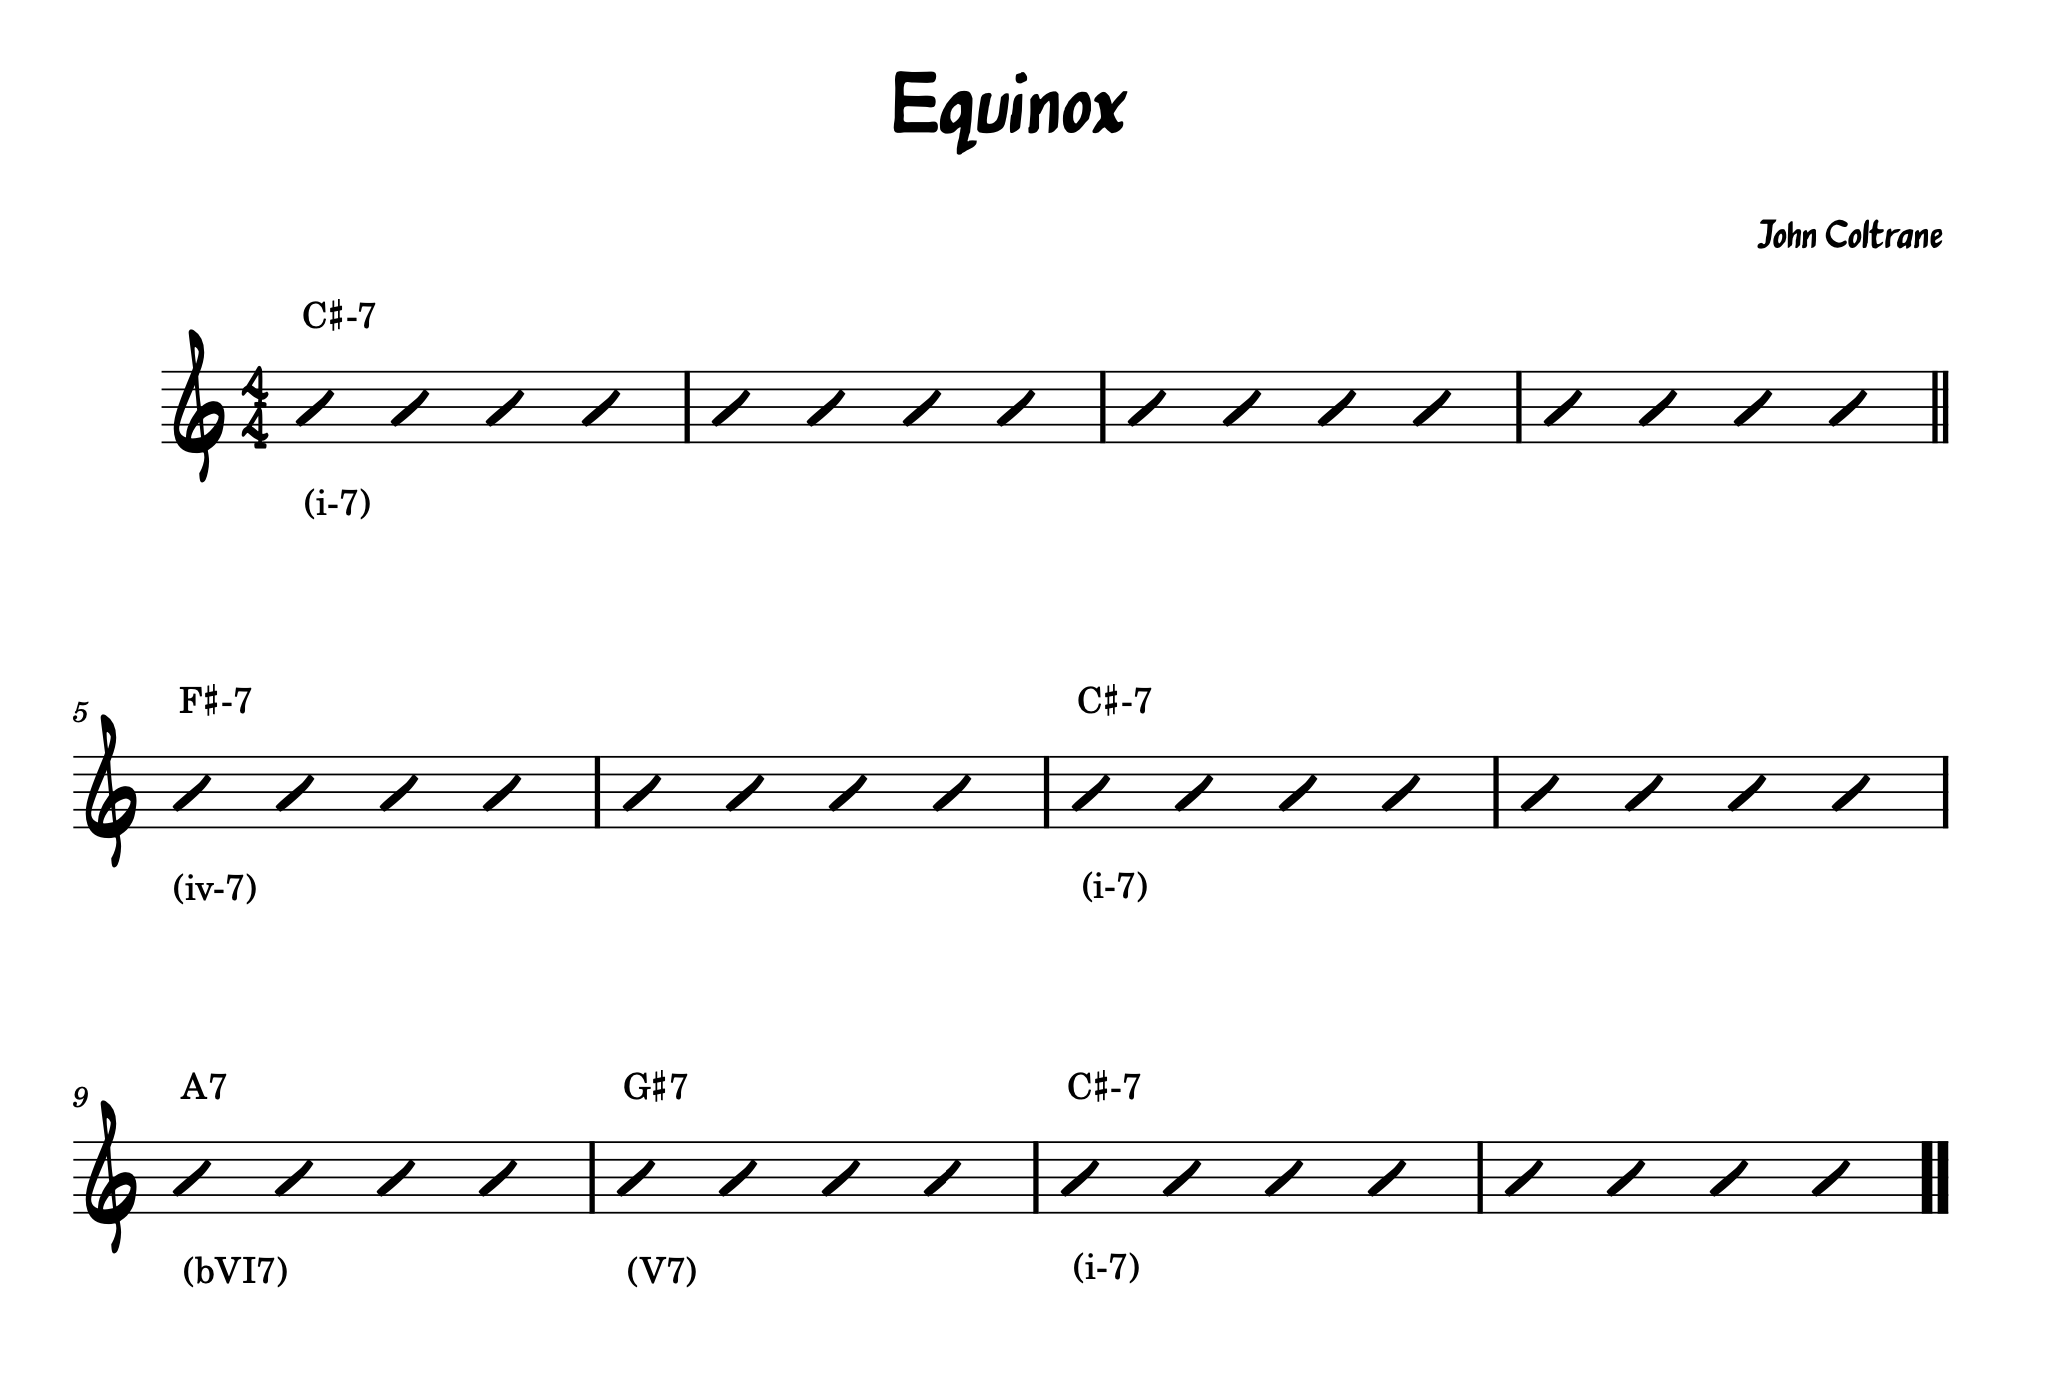 Lead sheet for Equinox by John Coltrane